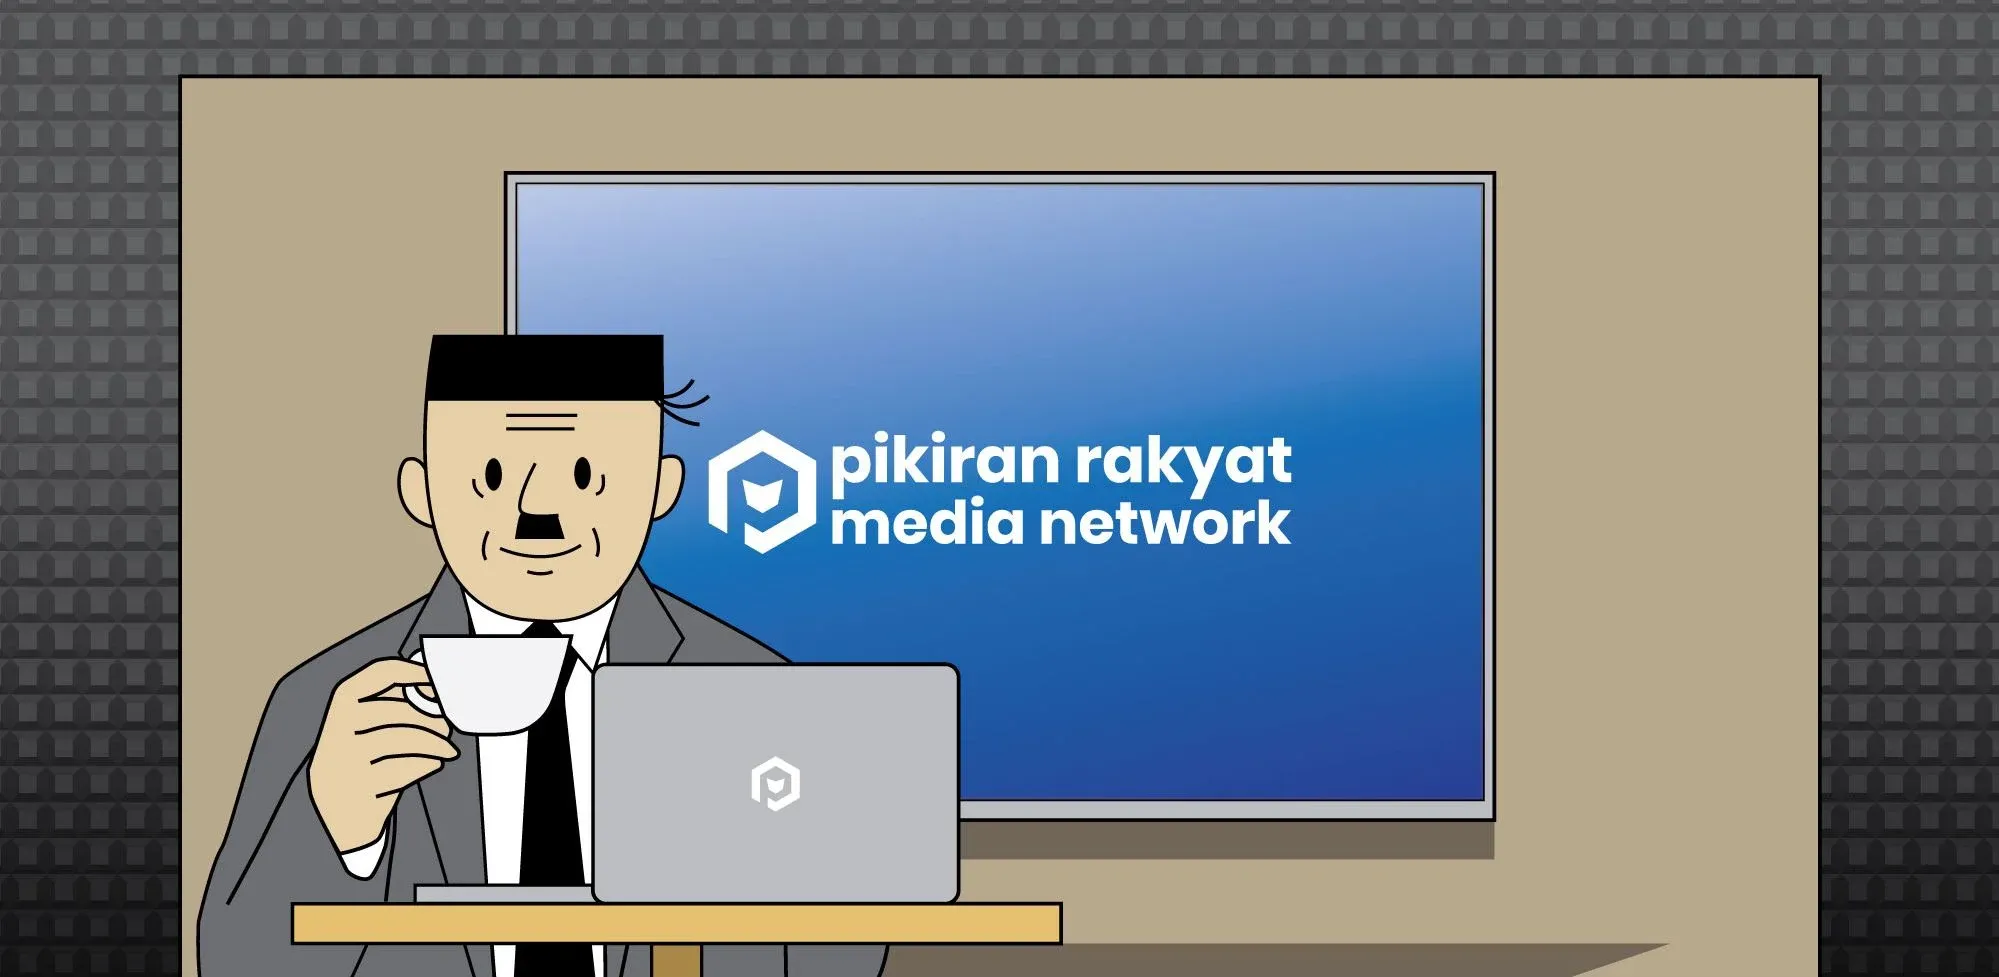 Media digital besutan Pikiran Rakyat diberinama Pikiran Rakyat Media Network